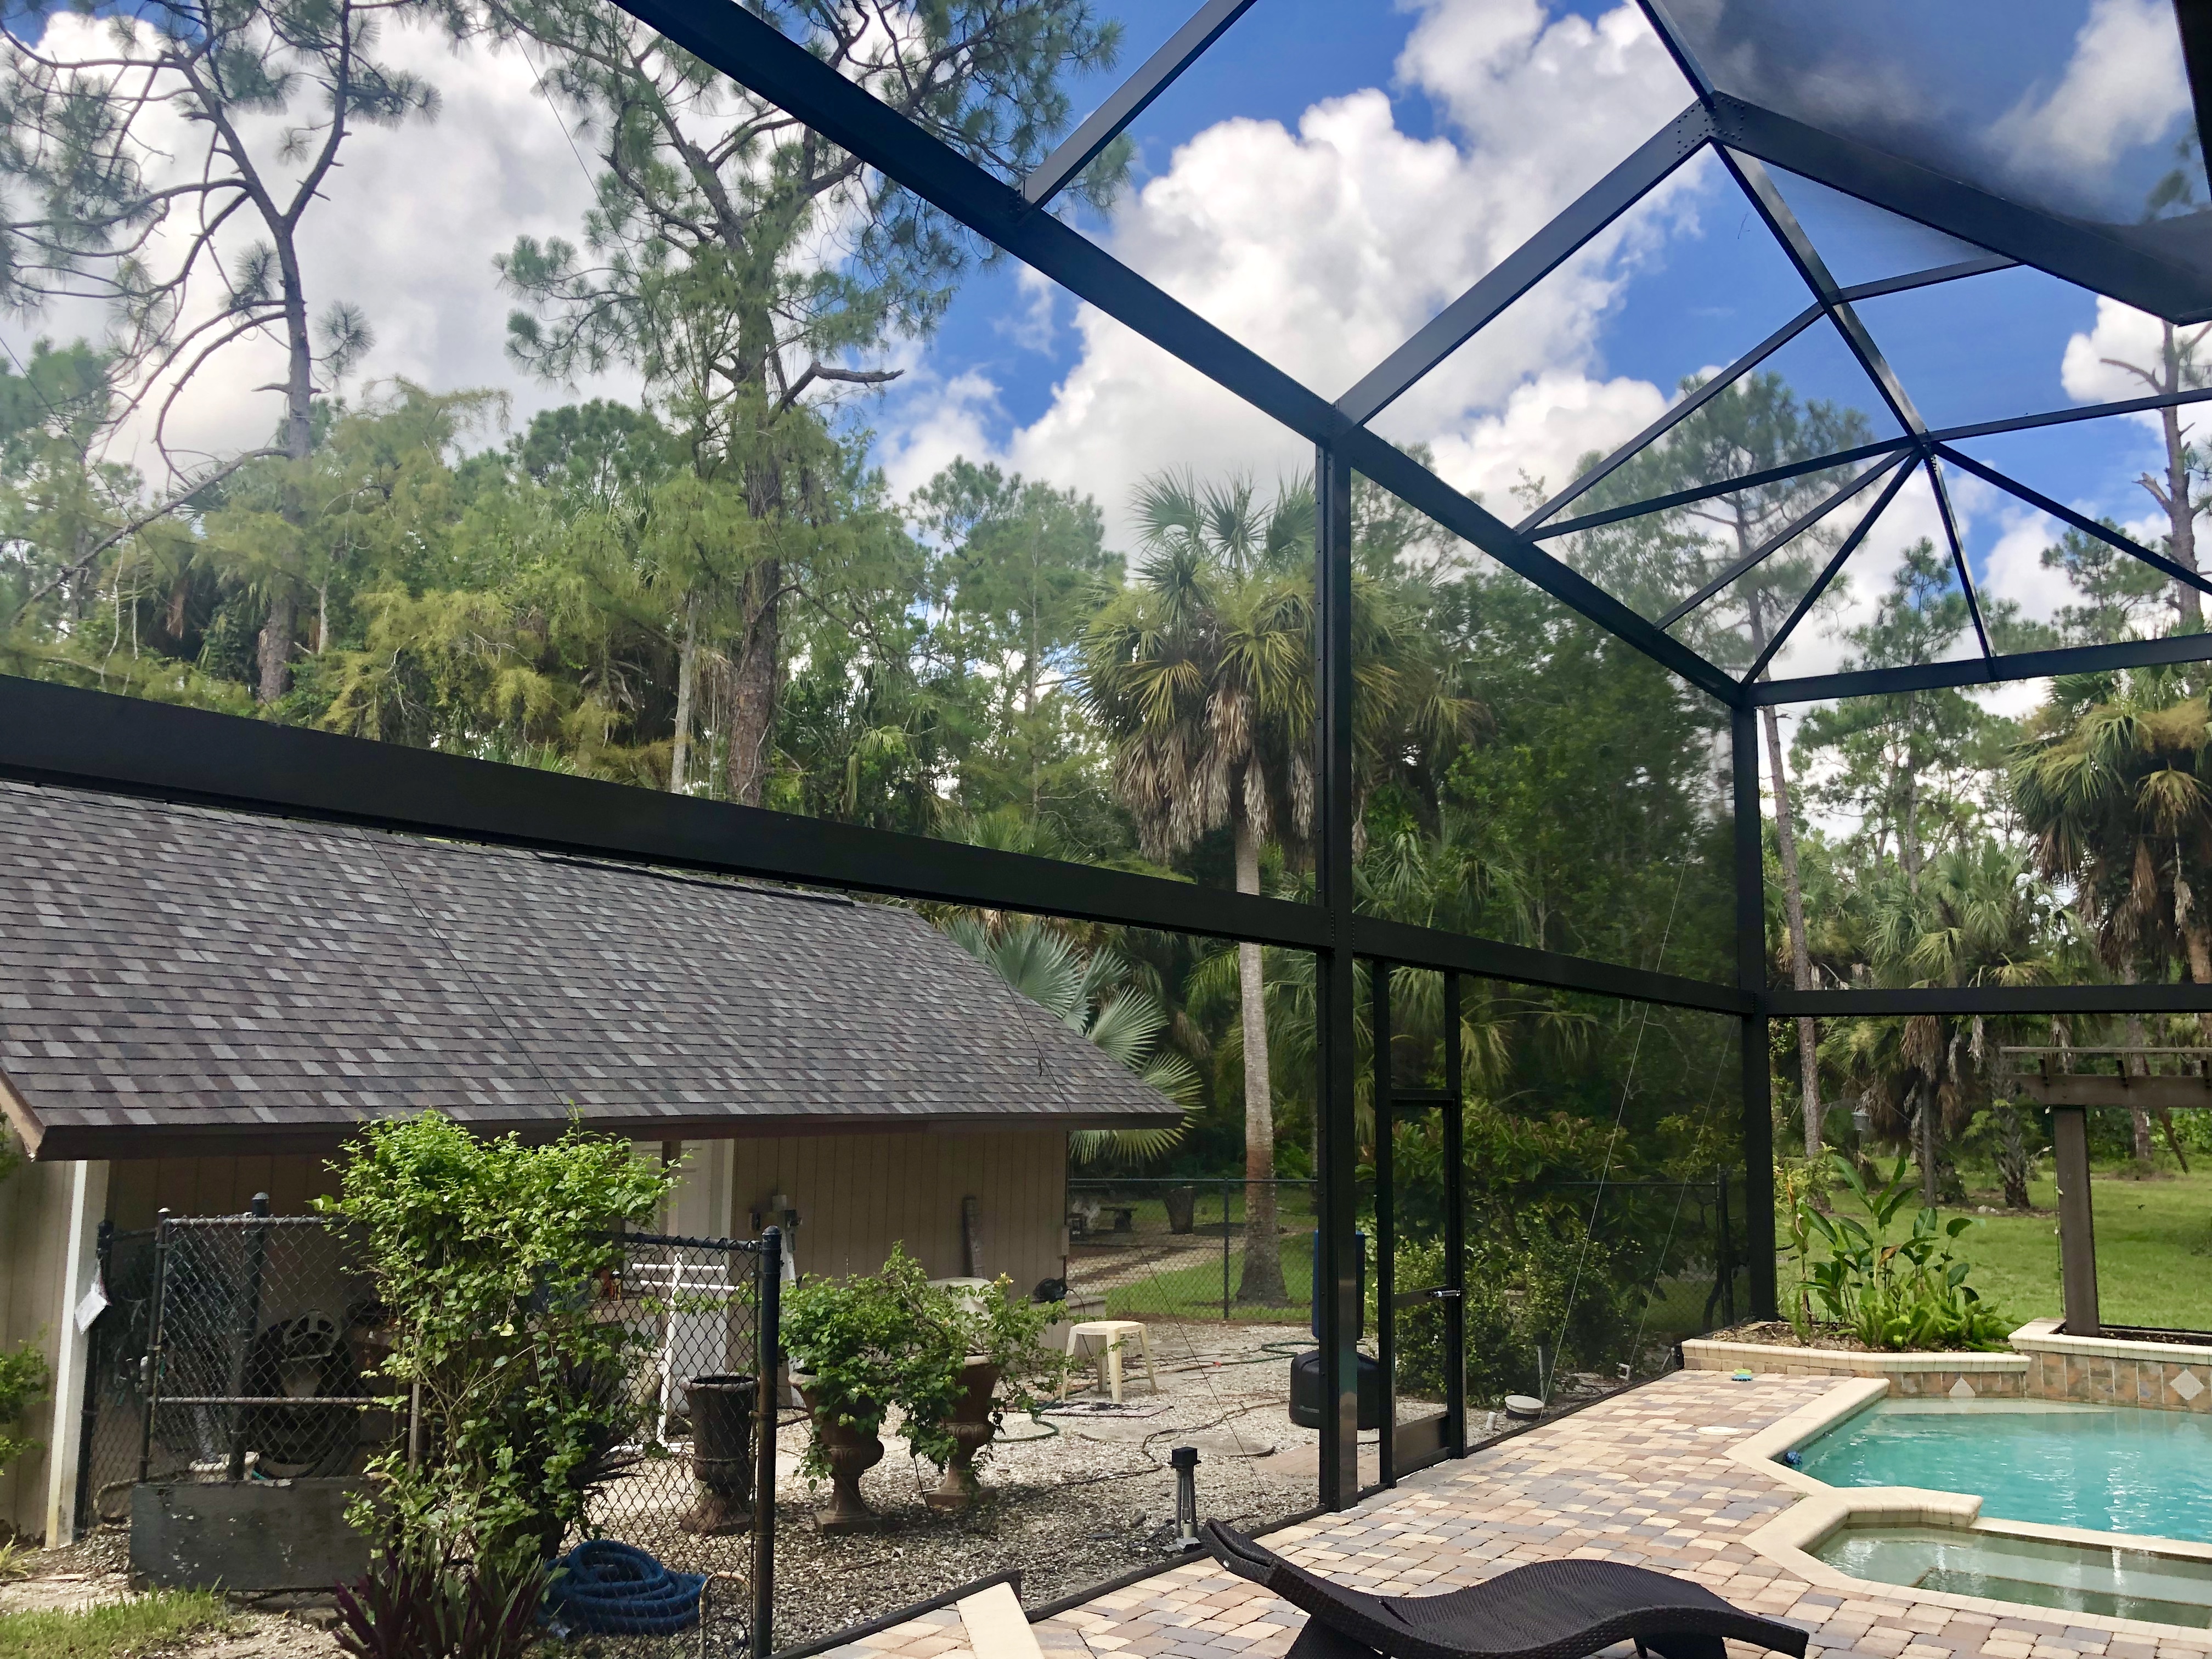 Two Story Panoramic-View Pool Enclosure